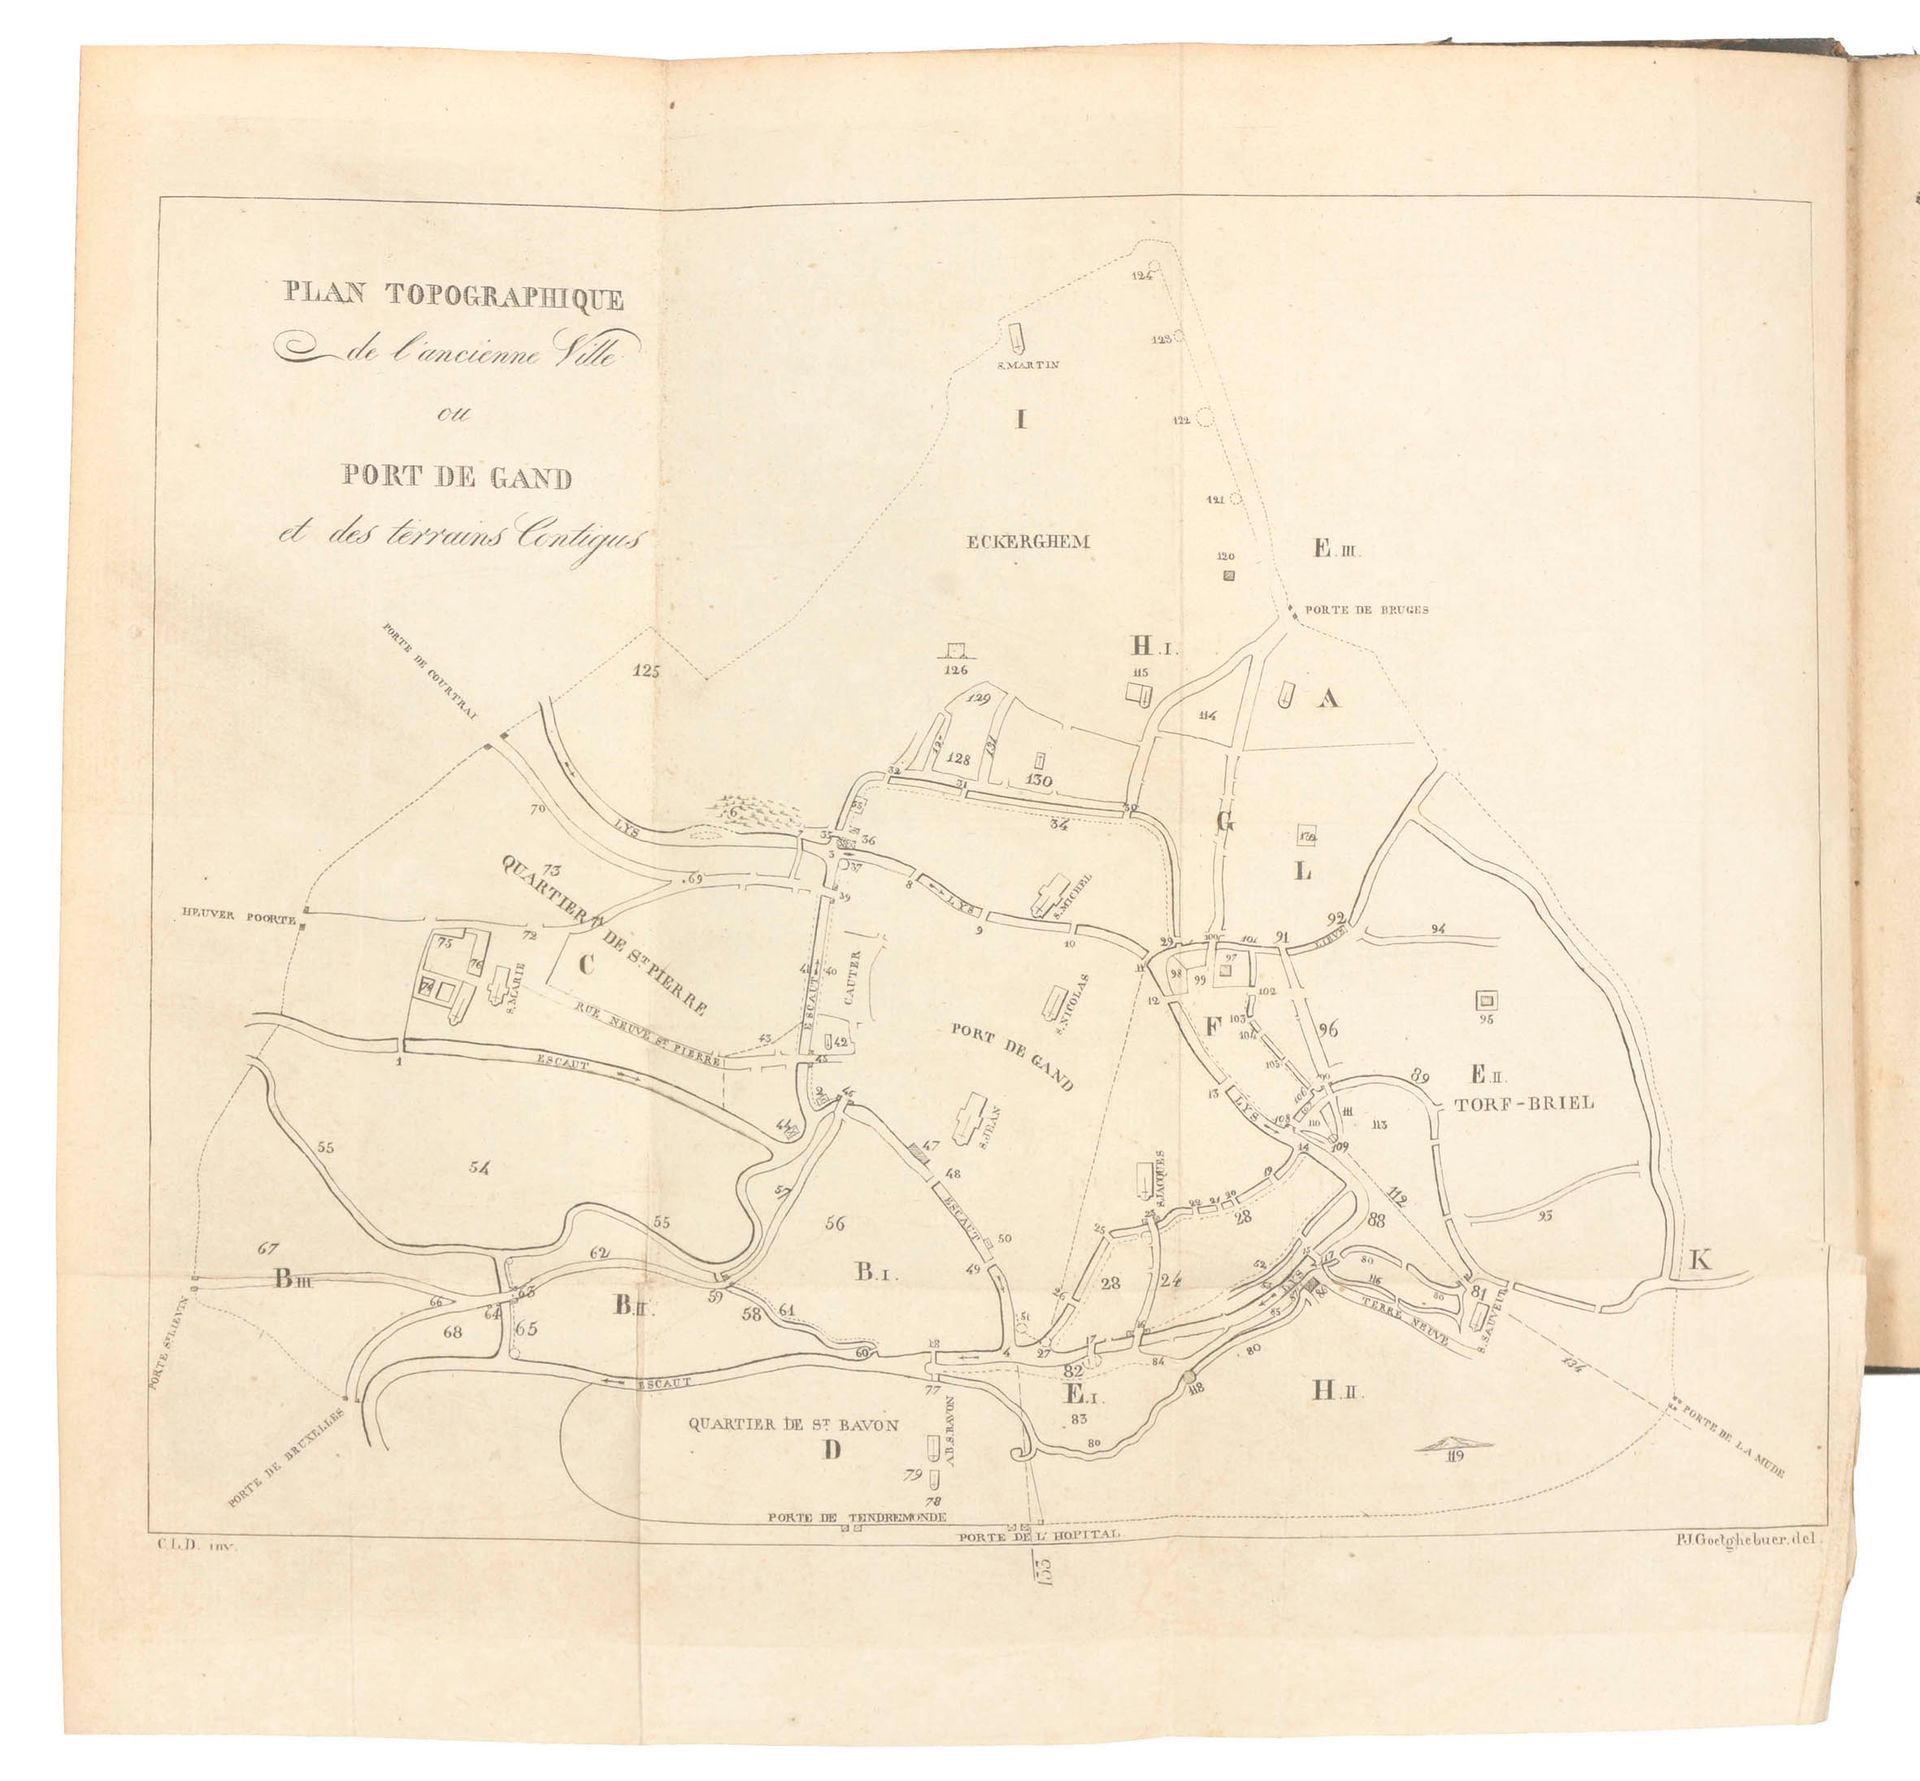 DIERICX, Charles-Louis 关于根特市的回忆录+附录

根特
P.F. De Goesin-Verhaeghe
1814-1816

4卷 i&hellip;